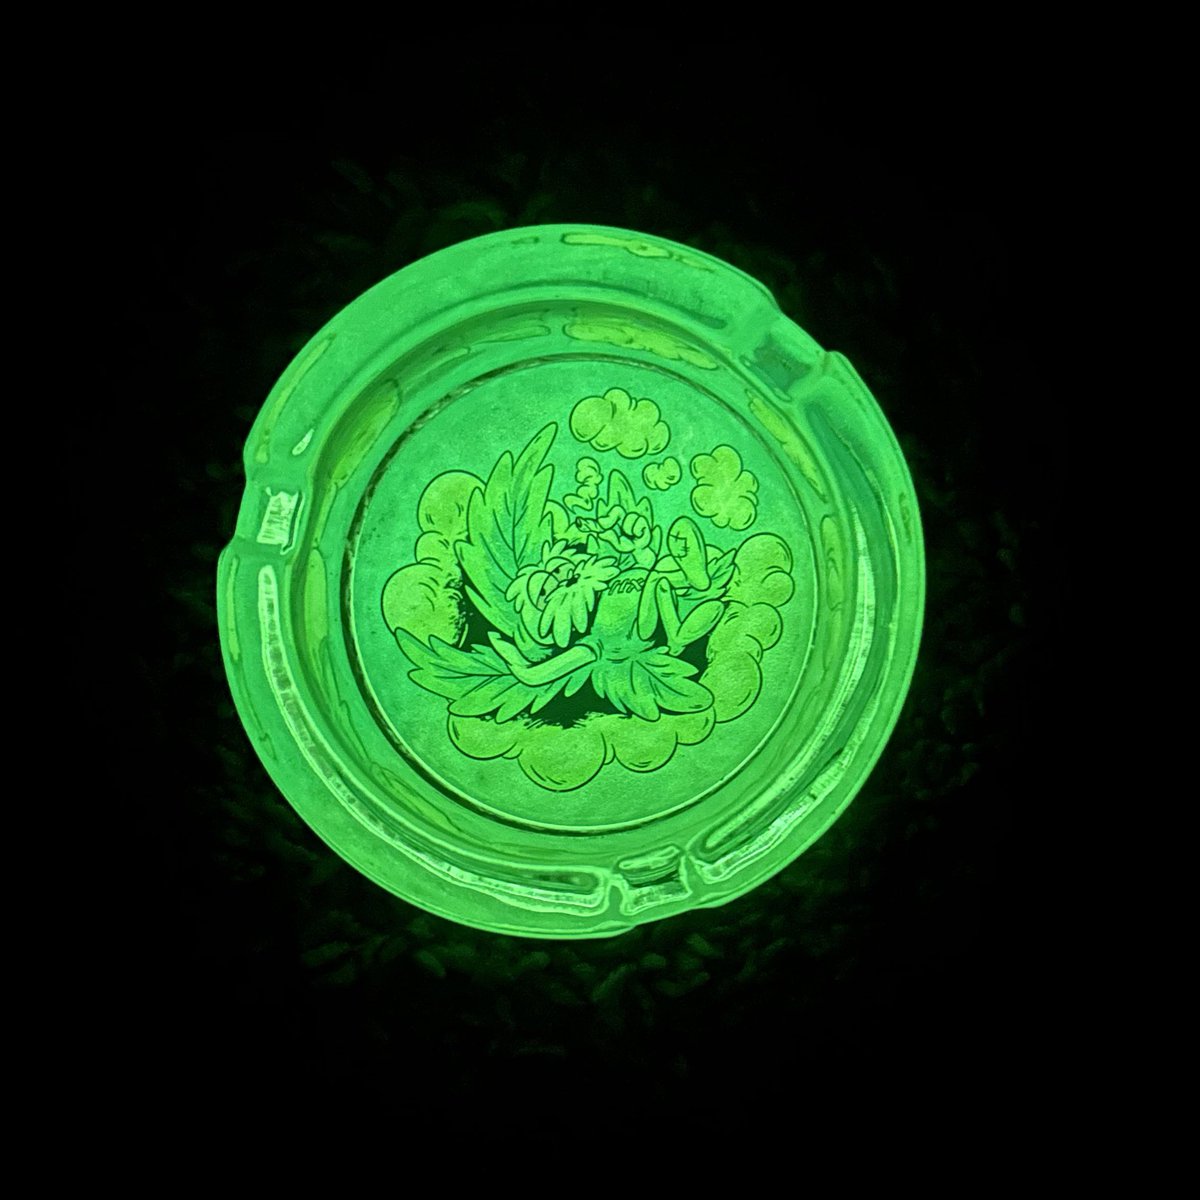 glow in the dark effect on the @BoDoggosNFT 4/20 ashtray looks sick! 🌿💨